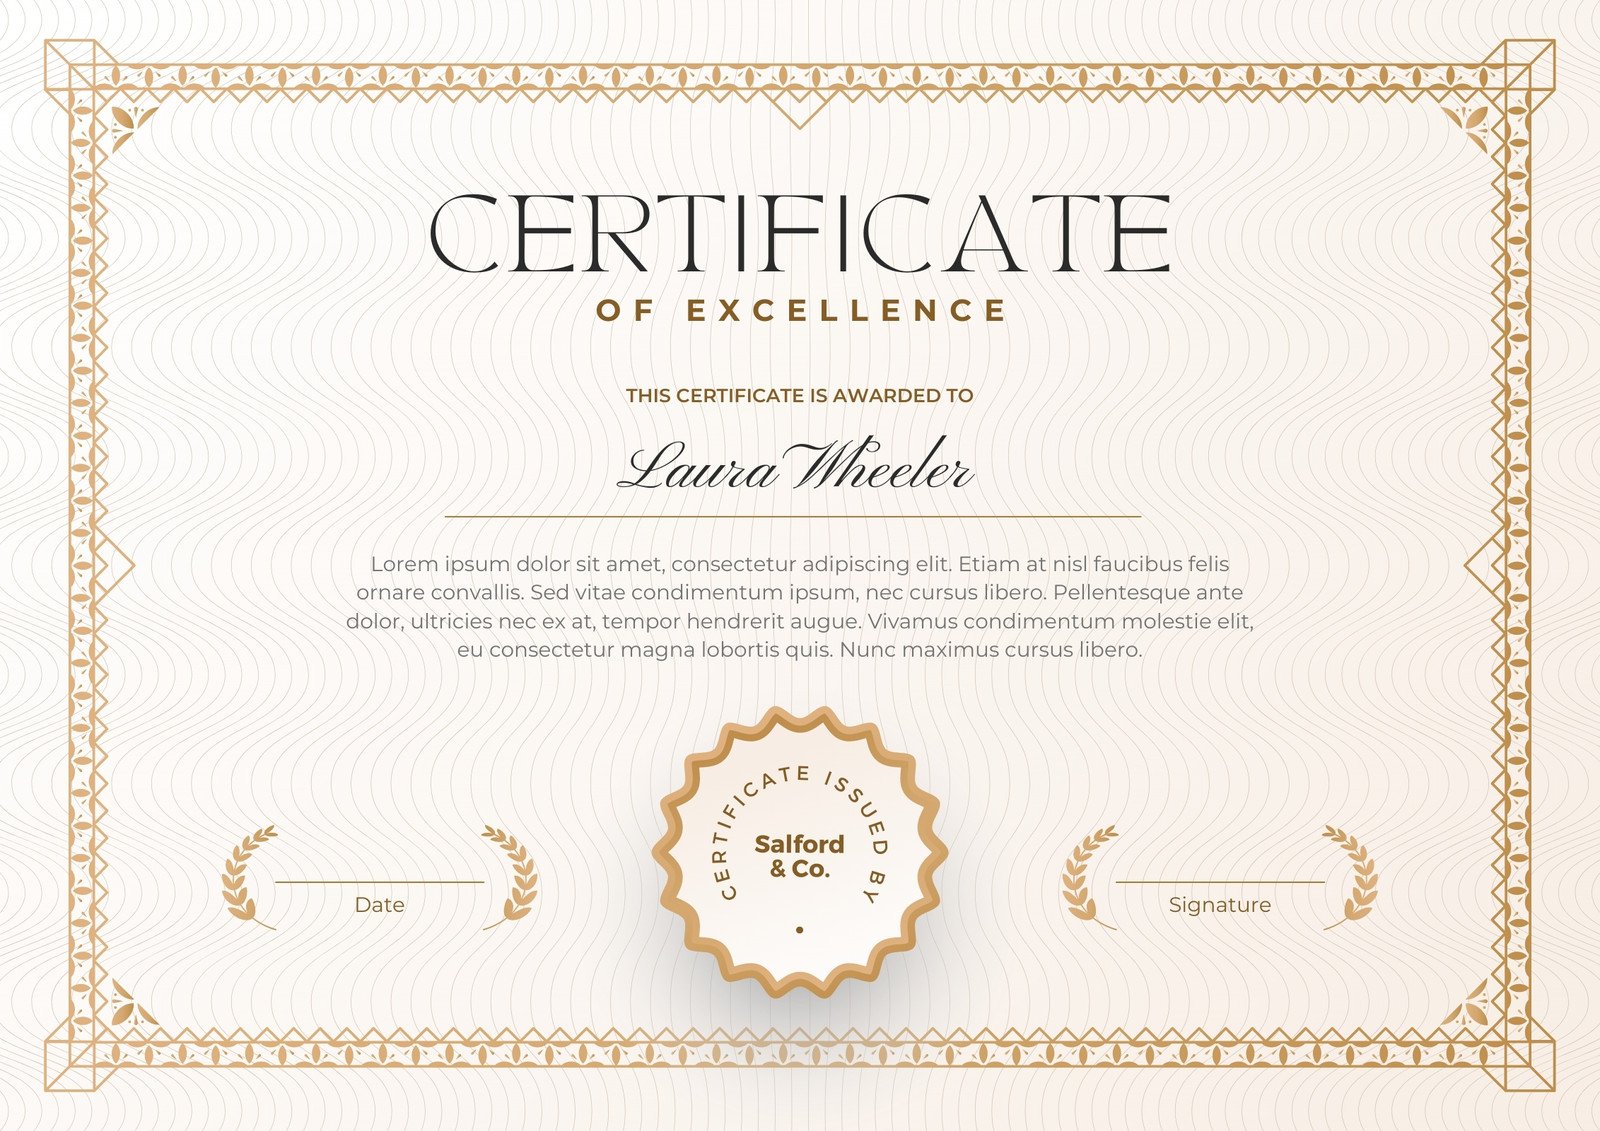 free diploma certificate template